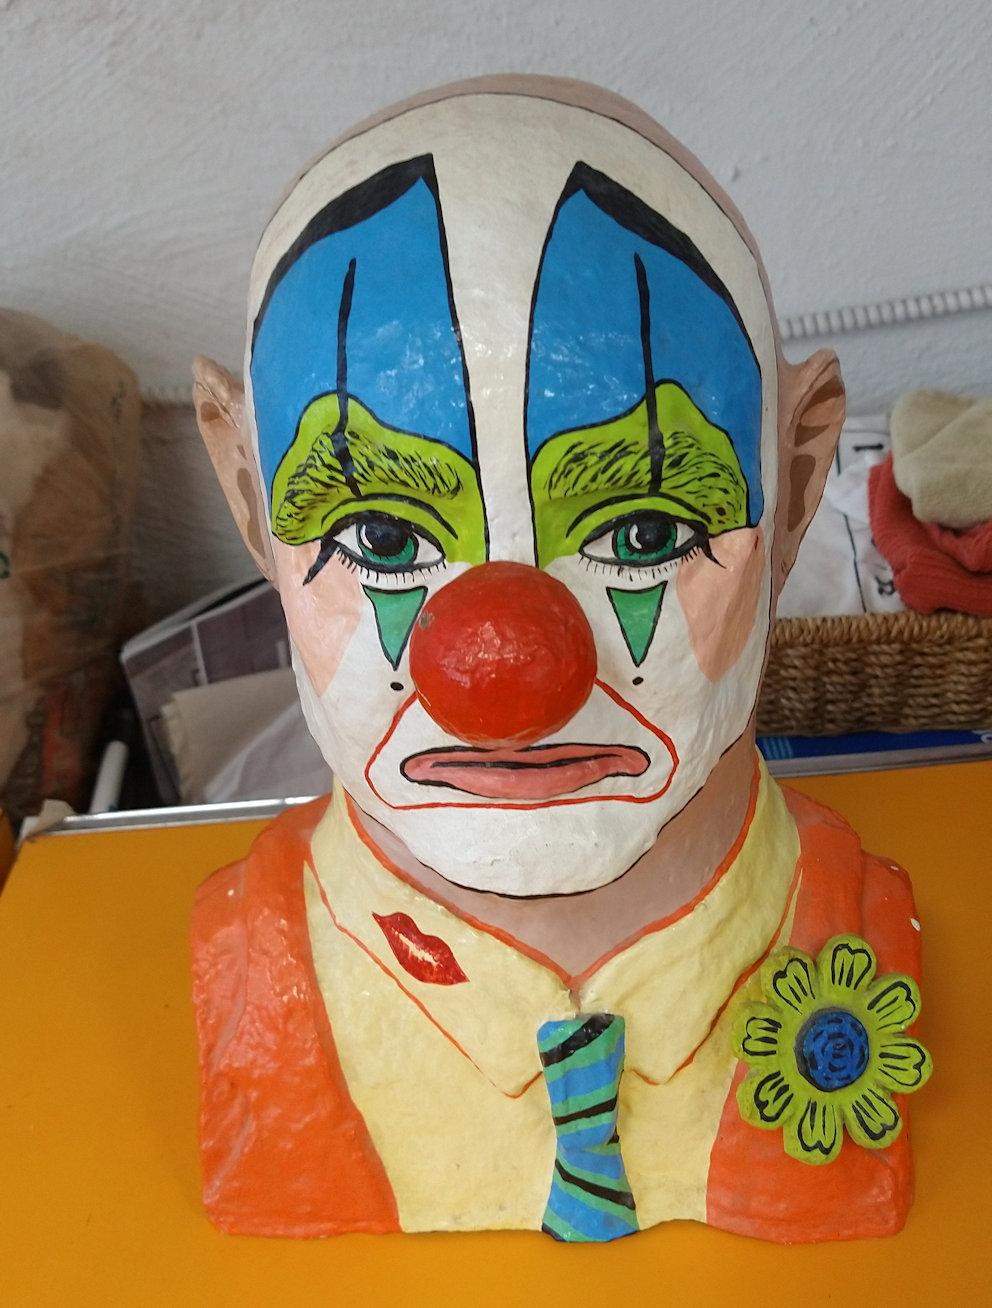 KK0310-Clown-head-bank